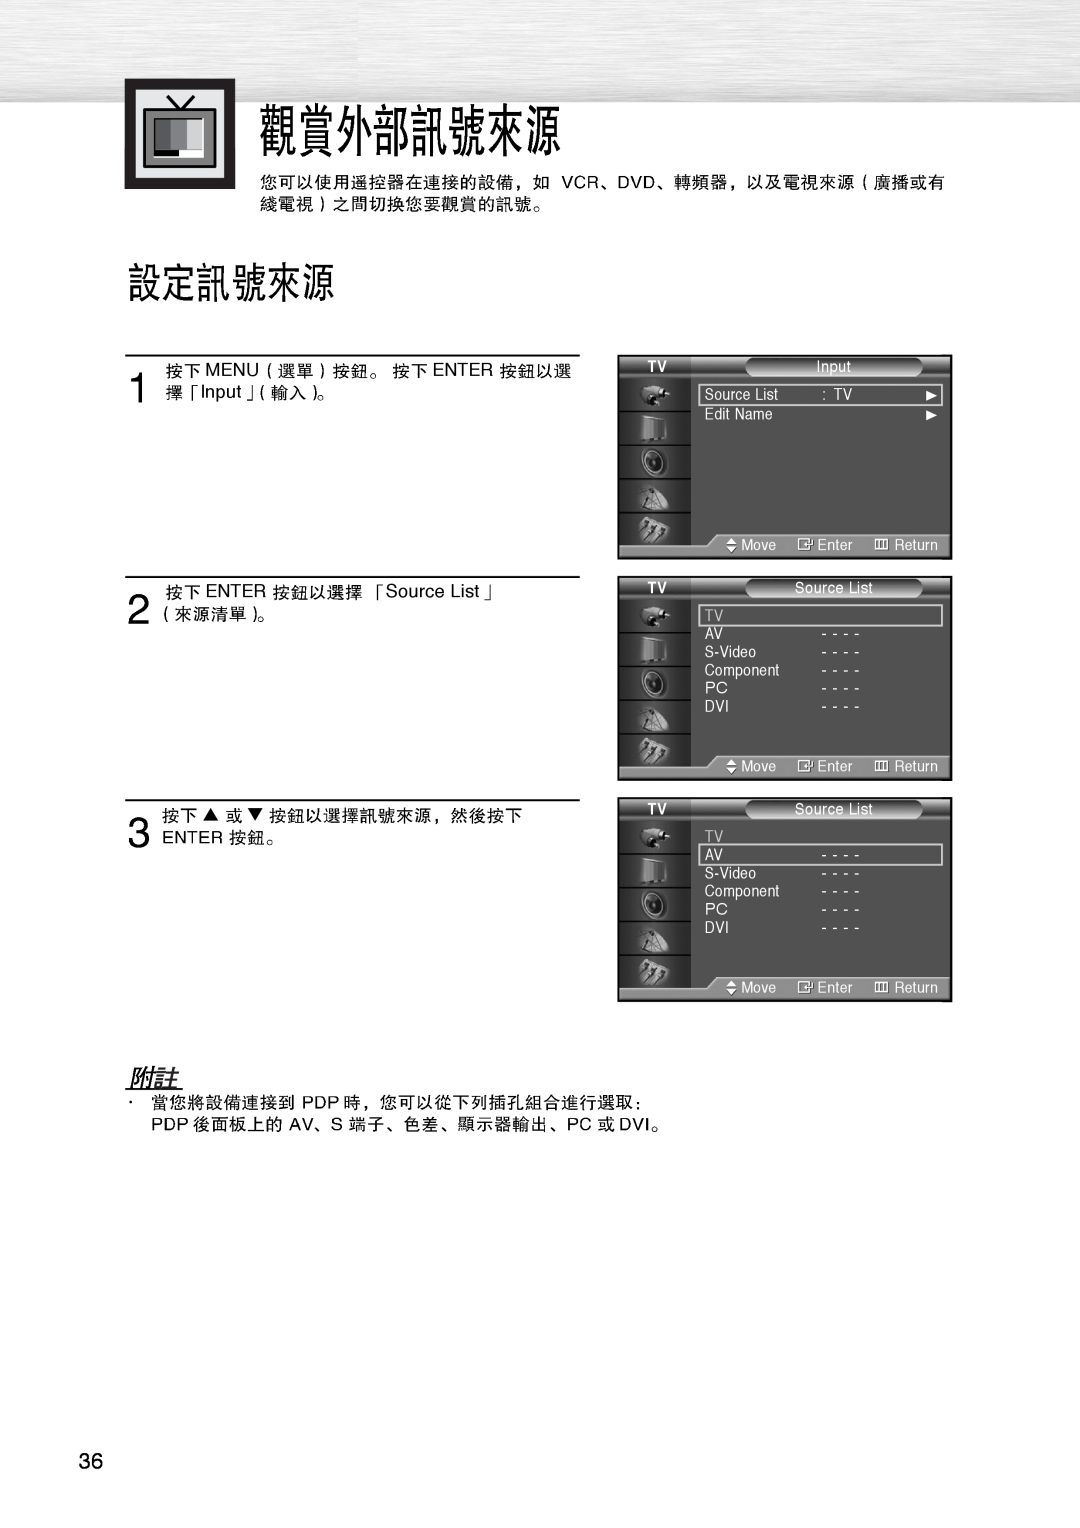 Samsung PL-42D4S manual MENU ENTER Input ENTER Source List 